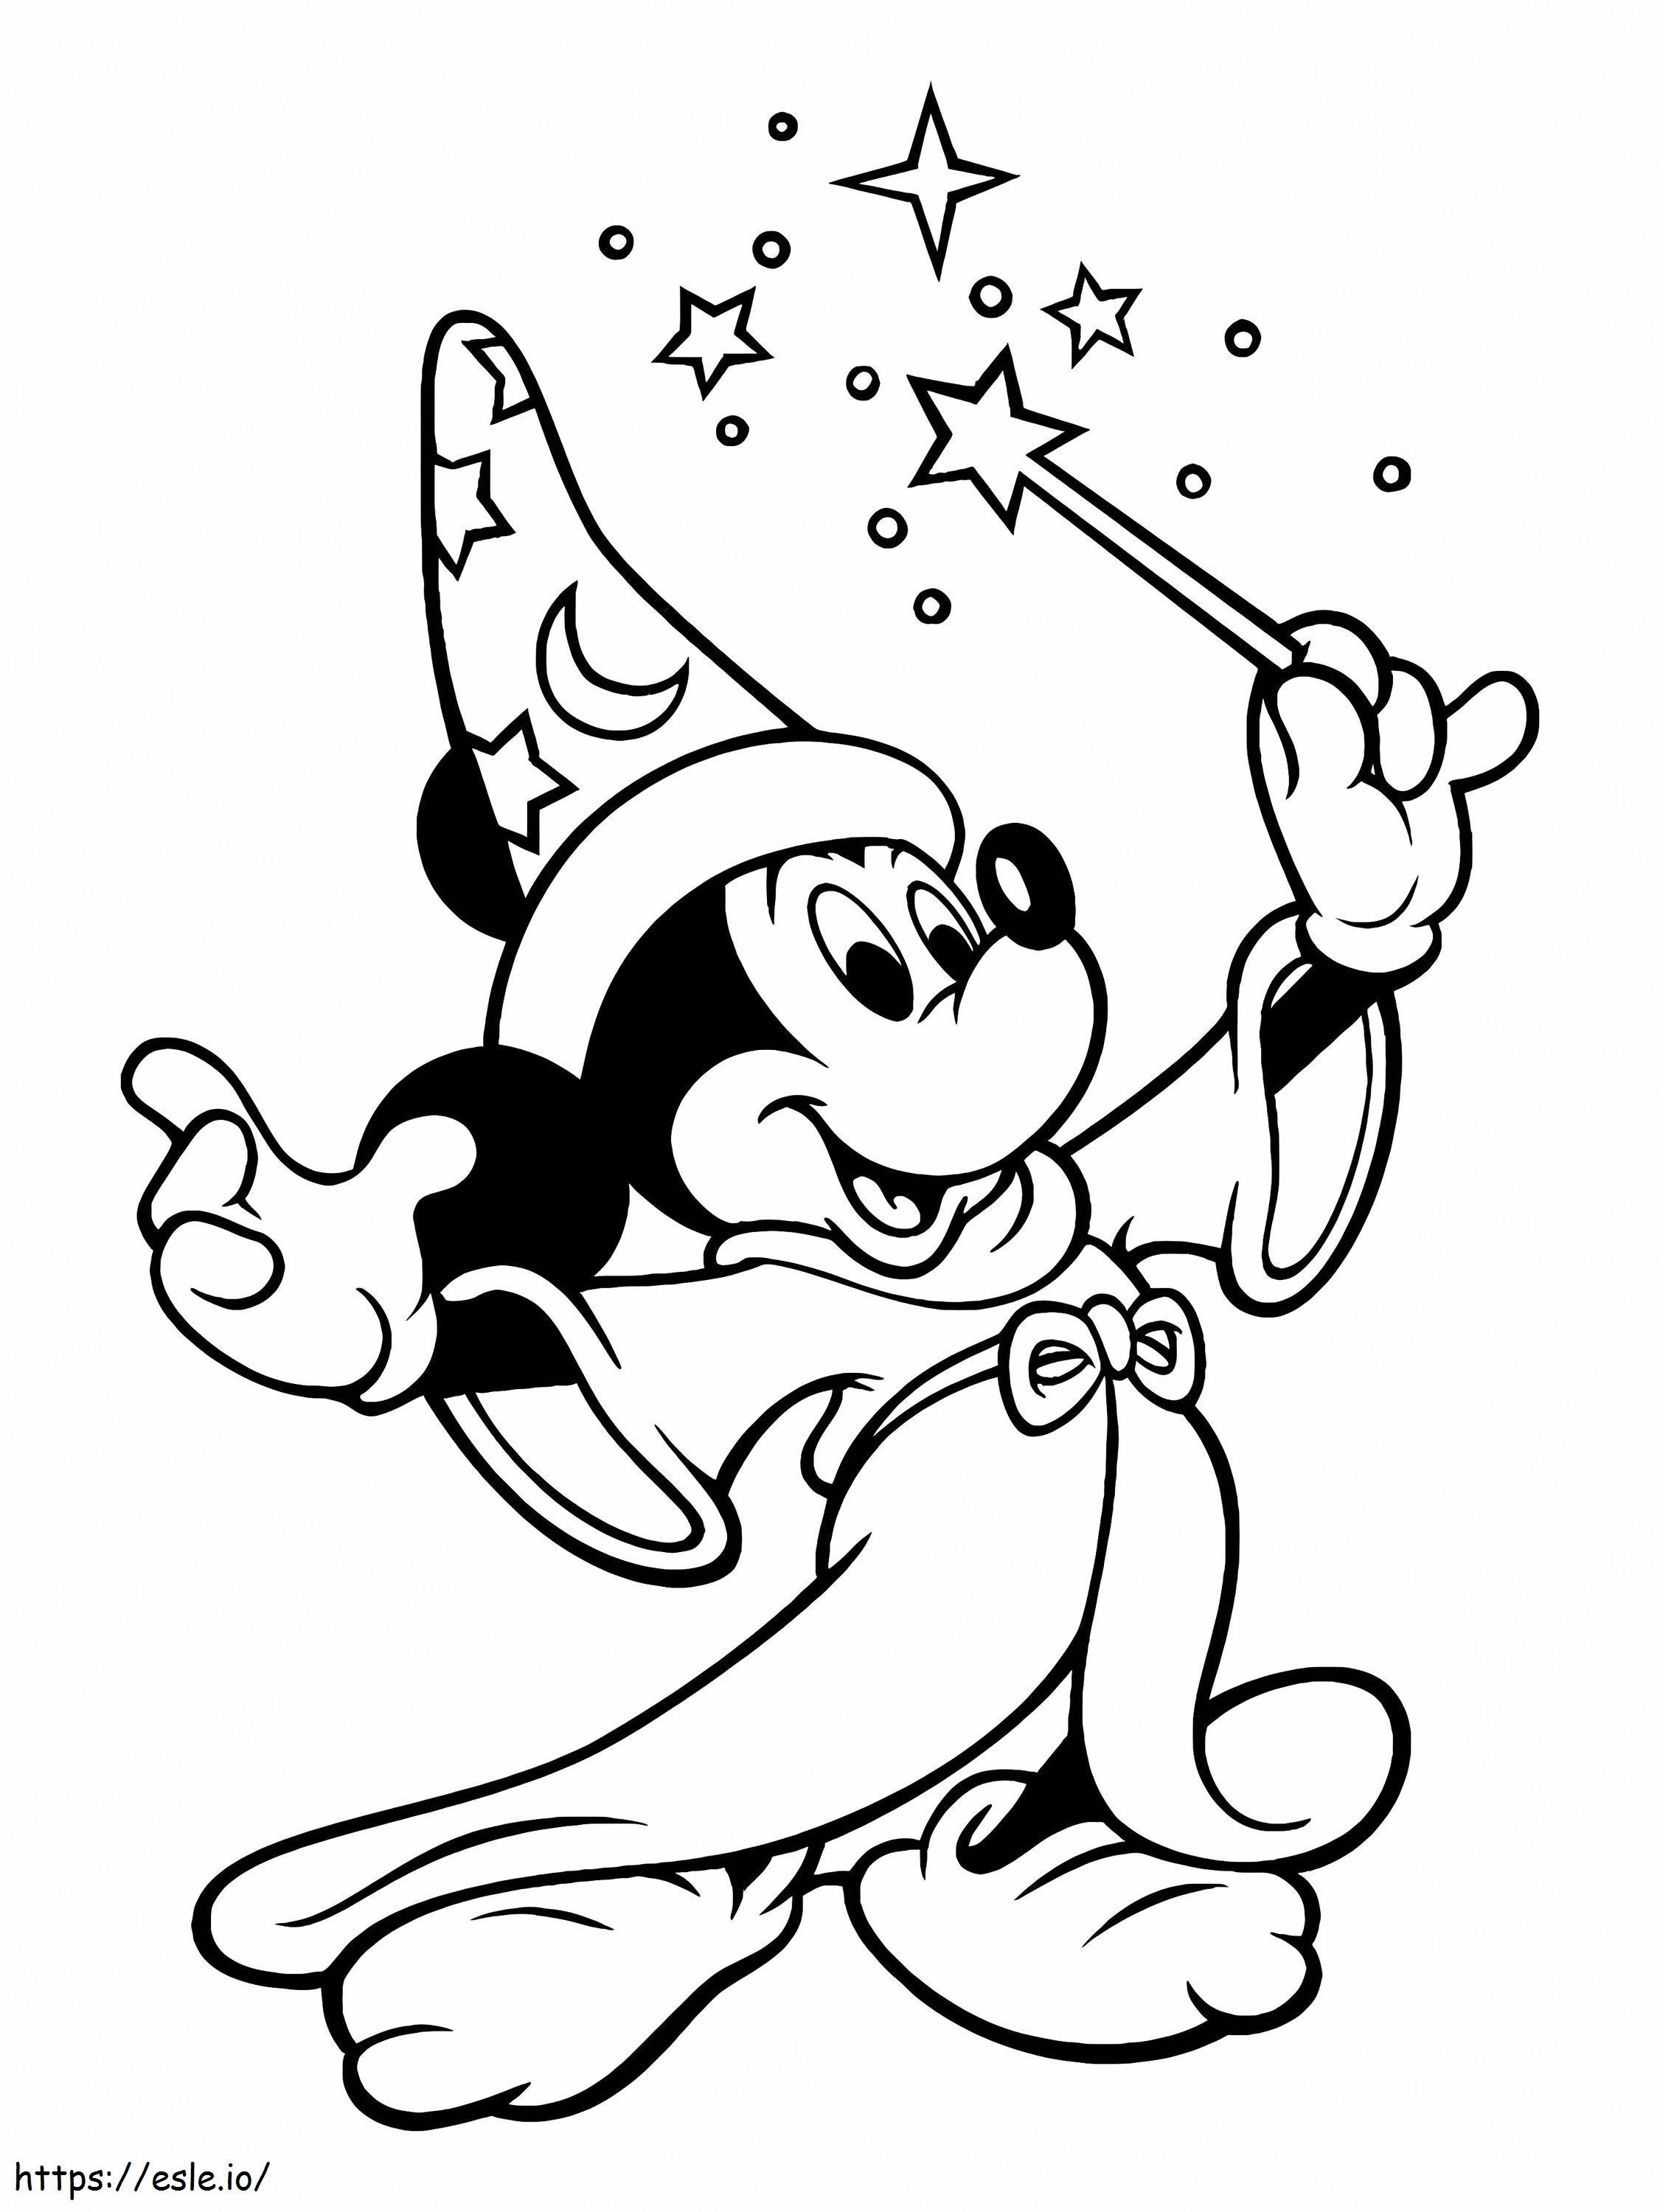 Coloriage Mickey de Fantasia à imprimer dessin